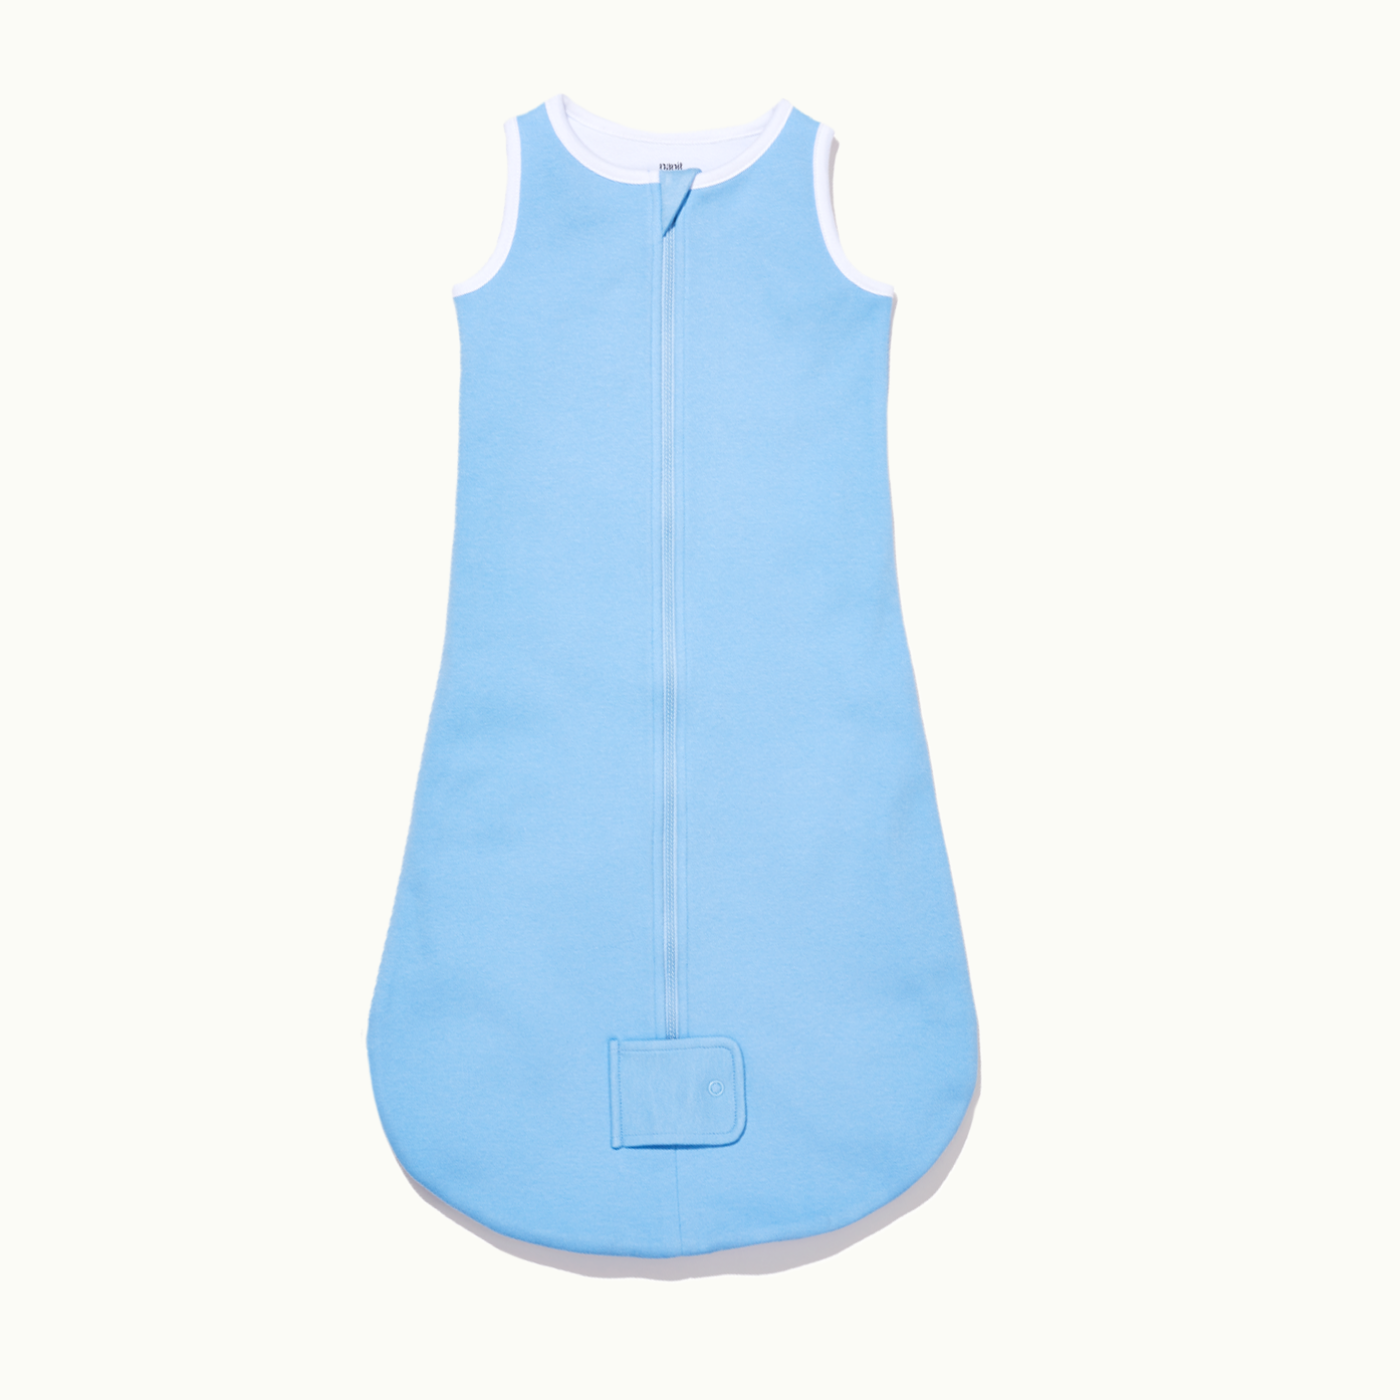 Nanit Sleep Wear Sleeping Bag, 100% Cotton Baby Clothes